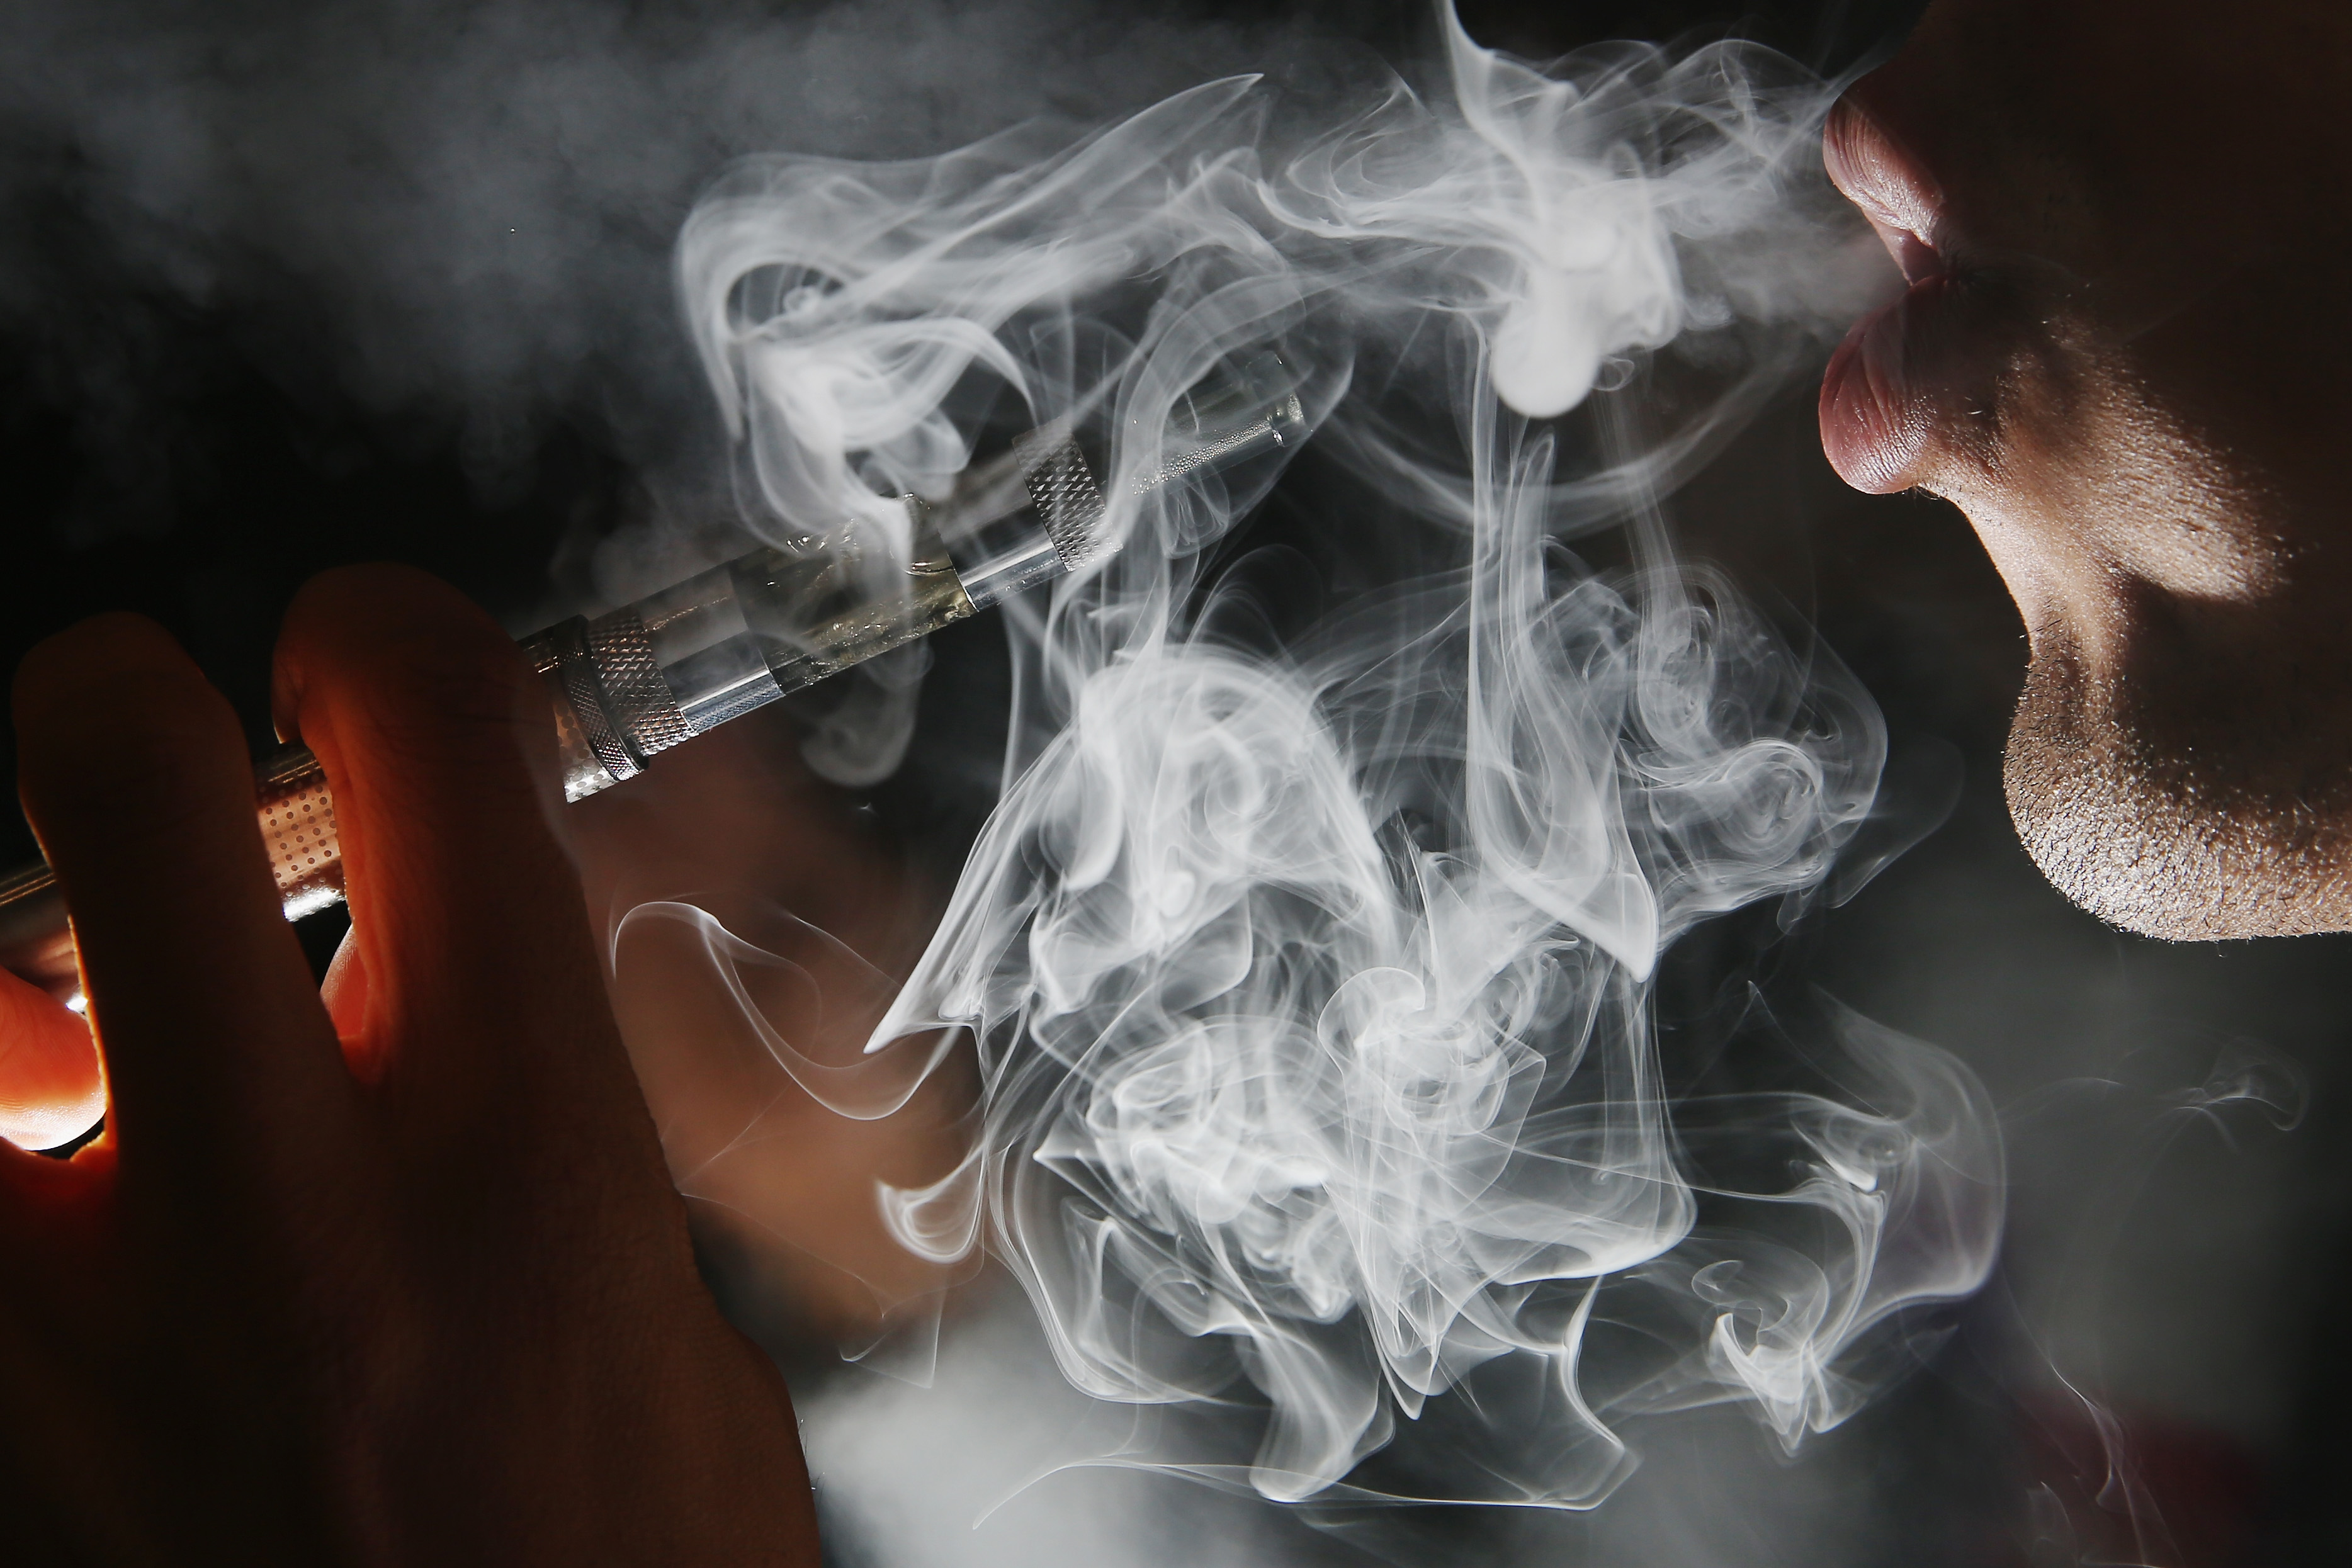 E-Zigarette explodiert: 21-Jähriger im Koma